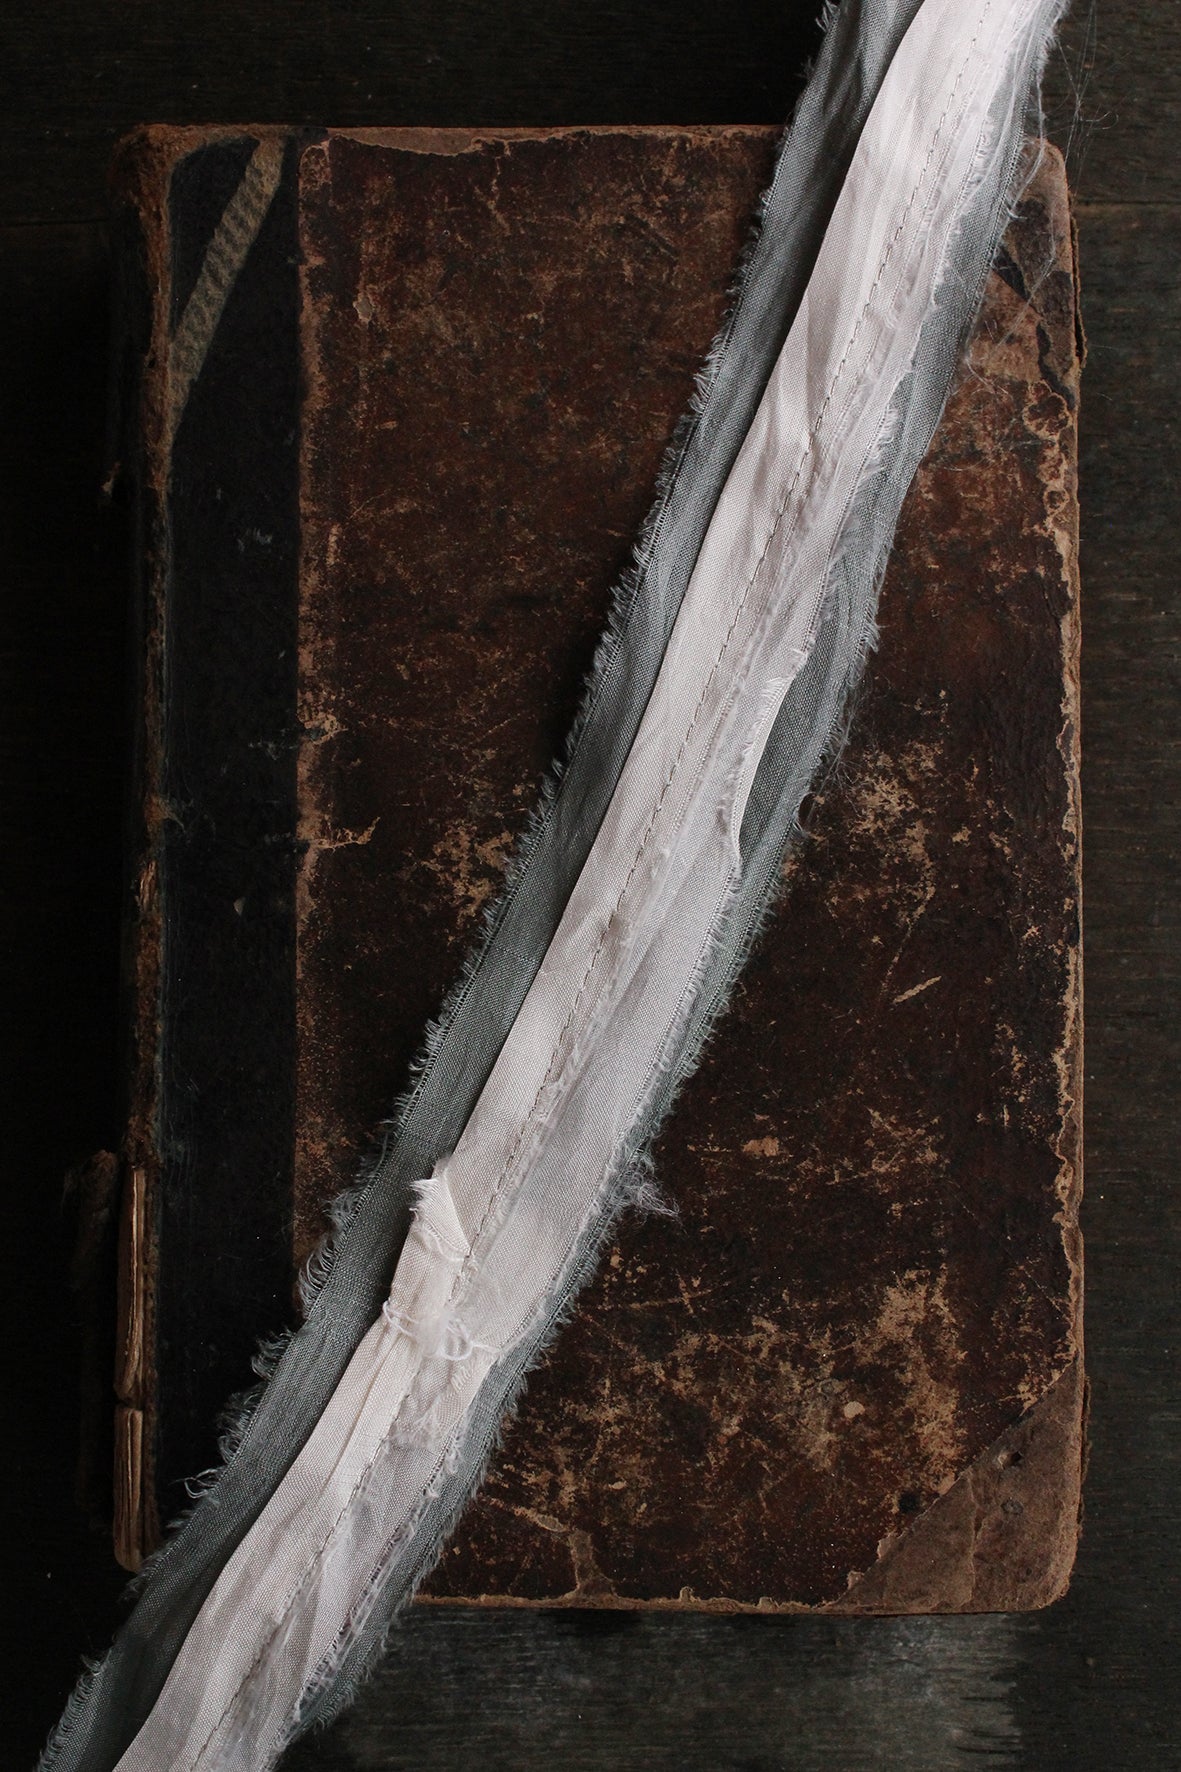 THE RIBBON PATH - Delicate Layered Silk Ribbon - Wintersill